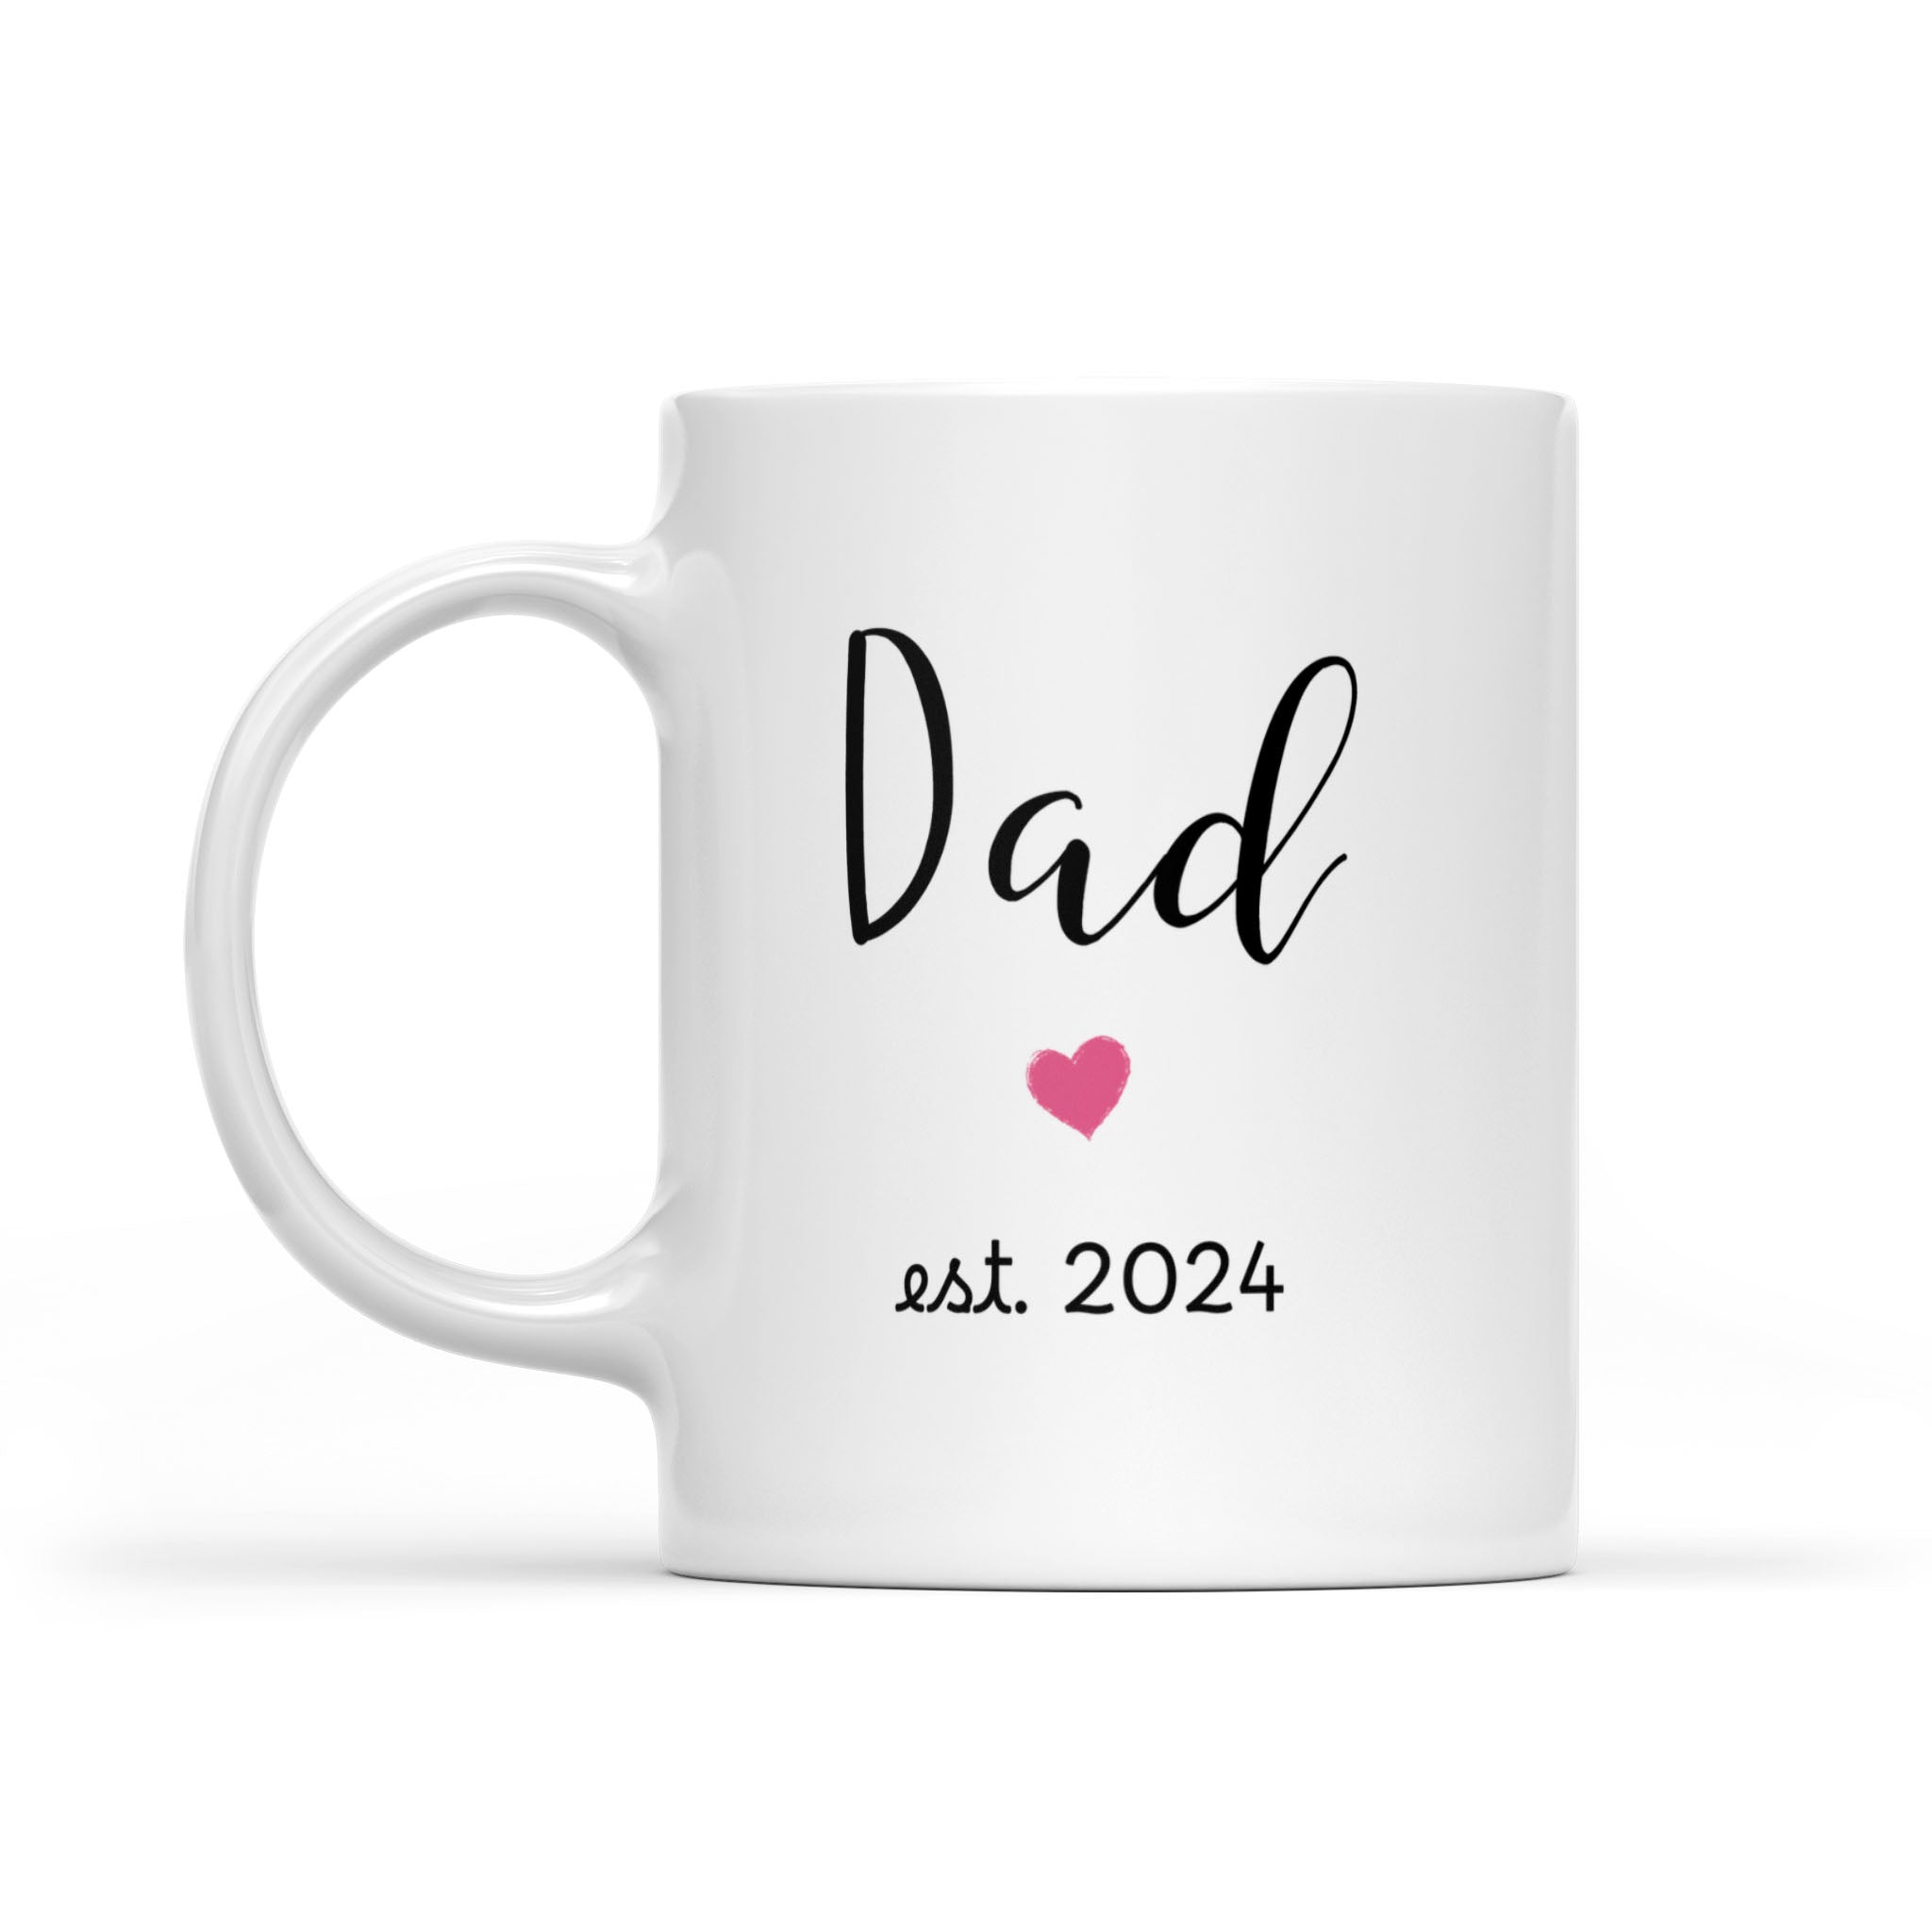 Dad Est 2024 Coffee Mug Pink Heart Design Gender Reveal Gift, Couple, New Bab